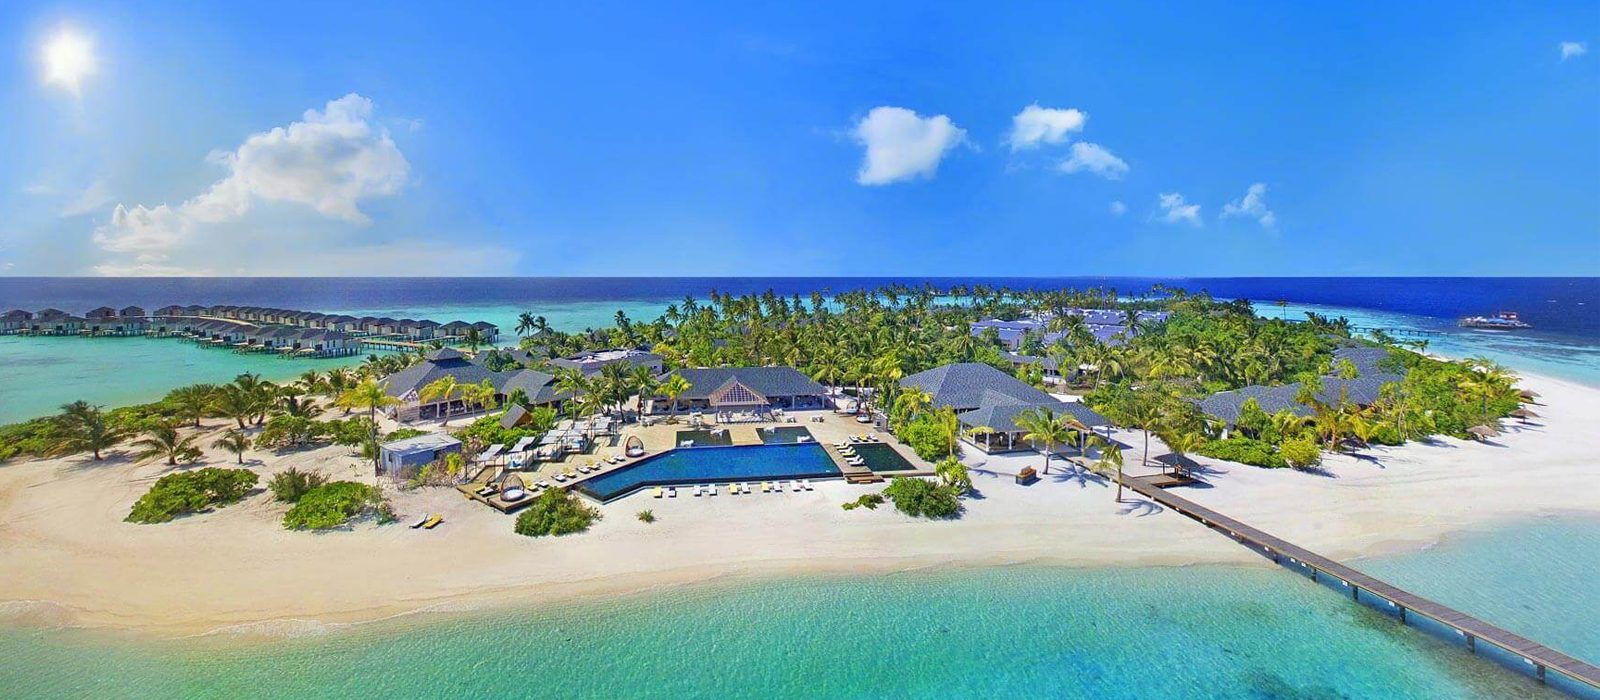 Luxury Maldives Holiday Packages Amari Havodda Maldives Header